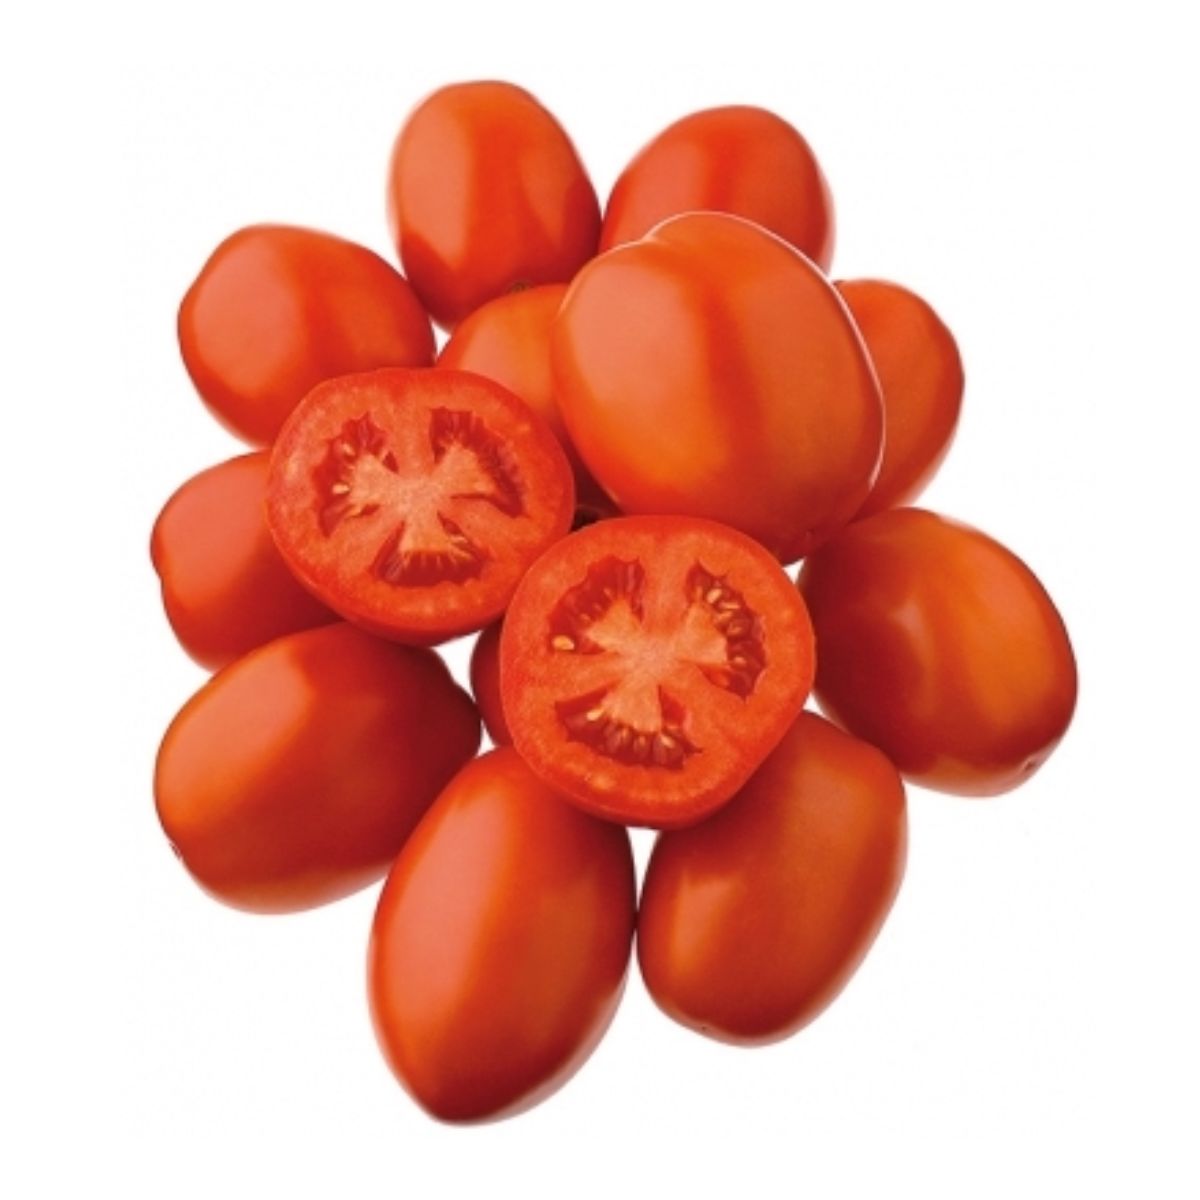 Tomate - Seminte de tomate Perfectpeel F1, 1000 seminte, hectarul.ro